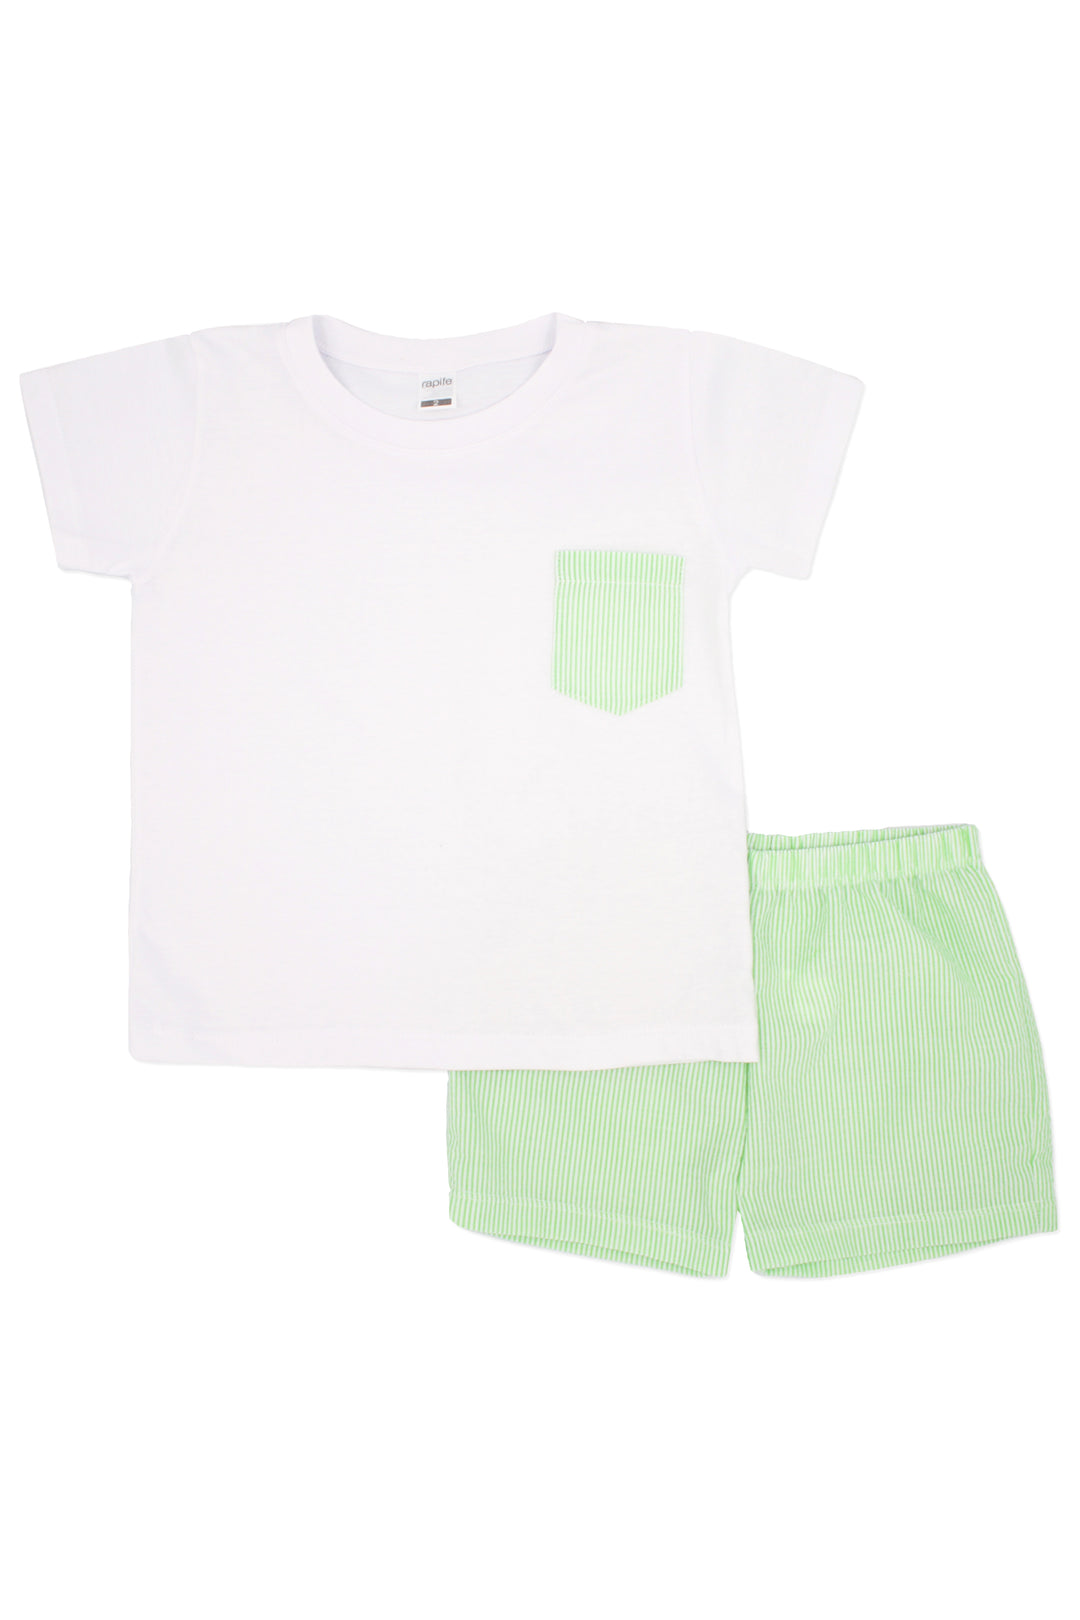 Rapife PREORDER "Eduardo" Apple Green Stripe T-Shirt & Shorts | Millie and John